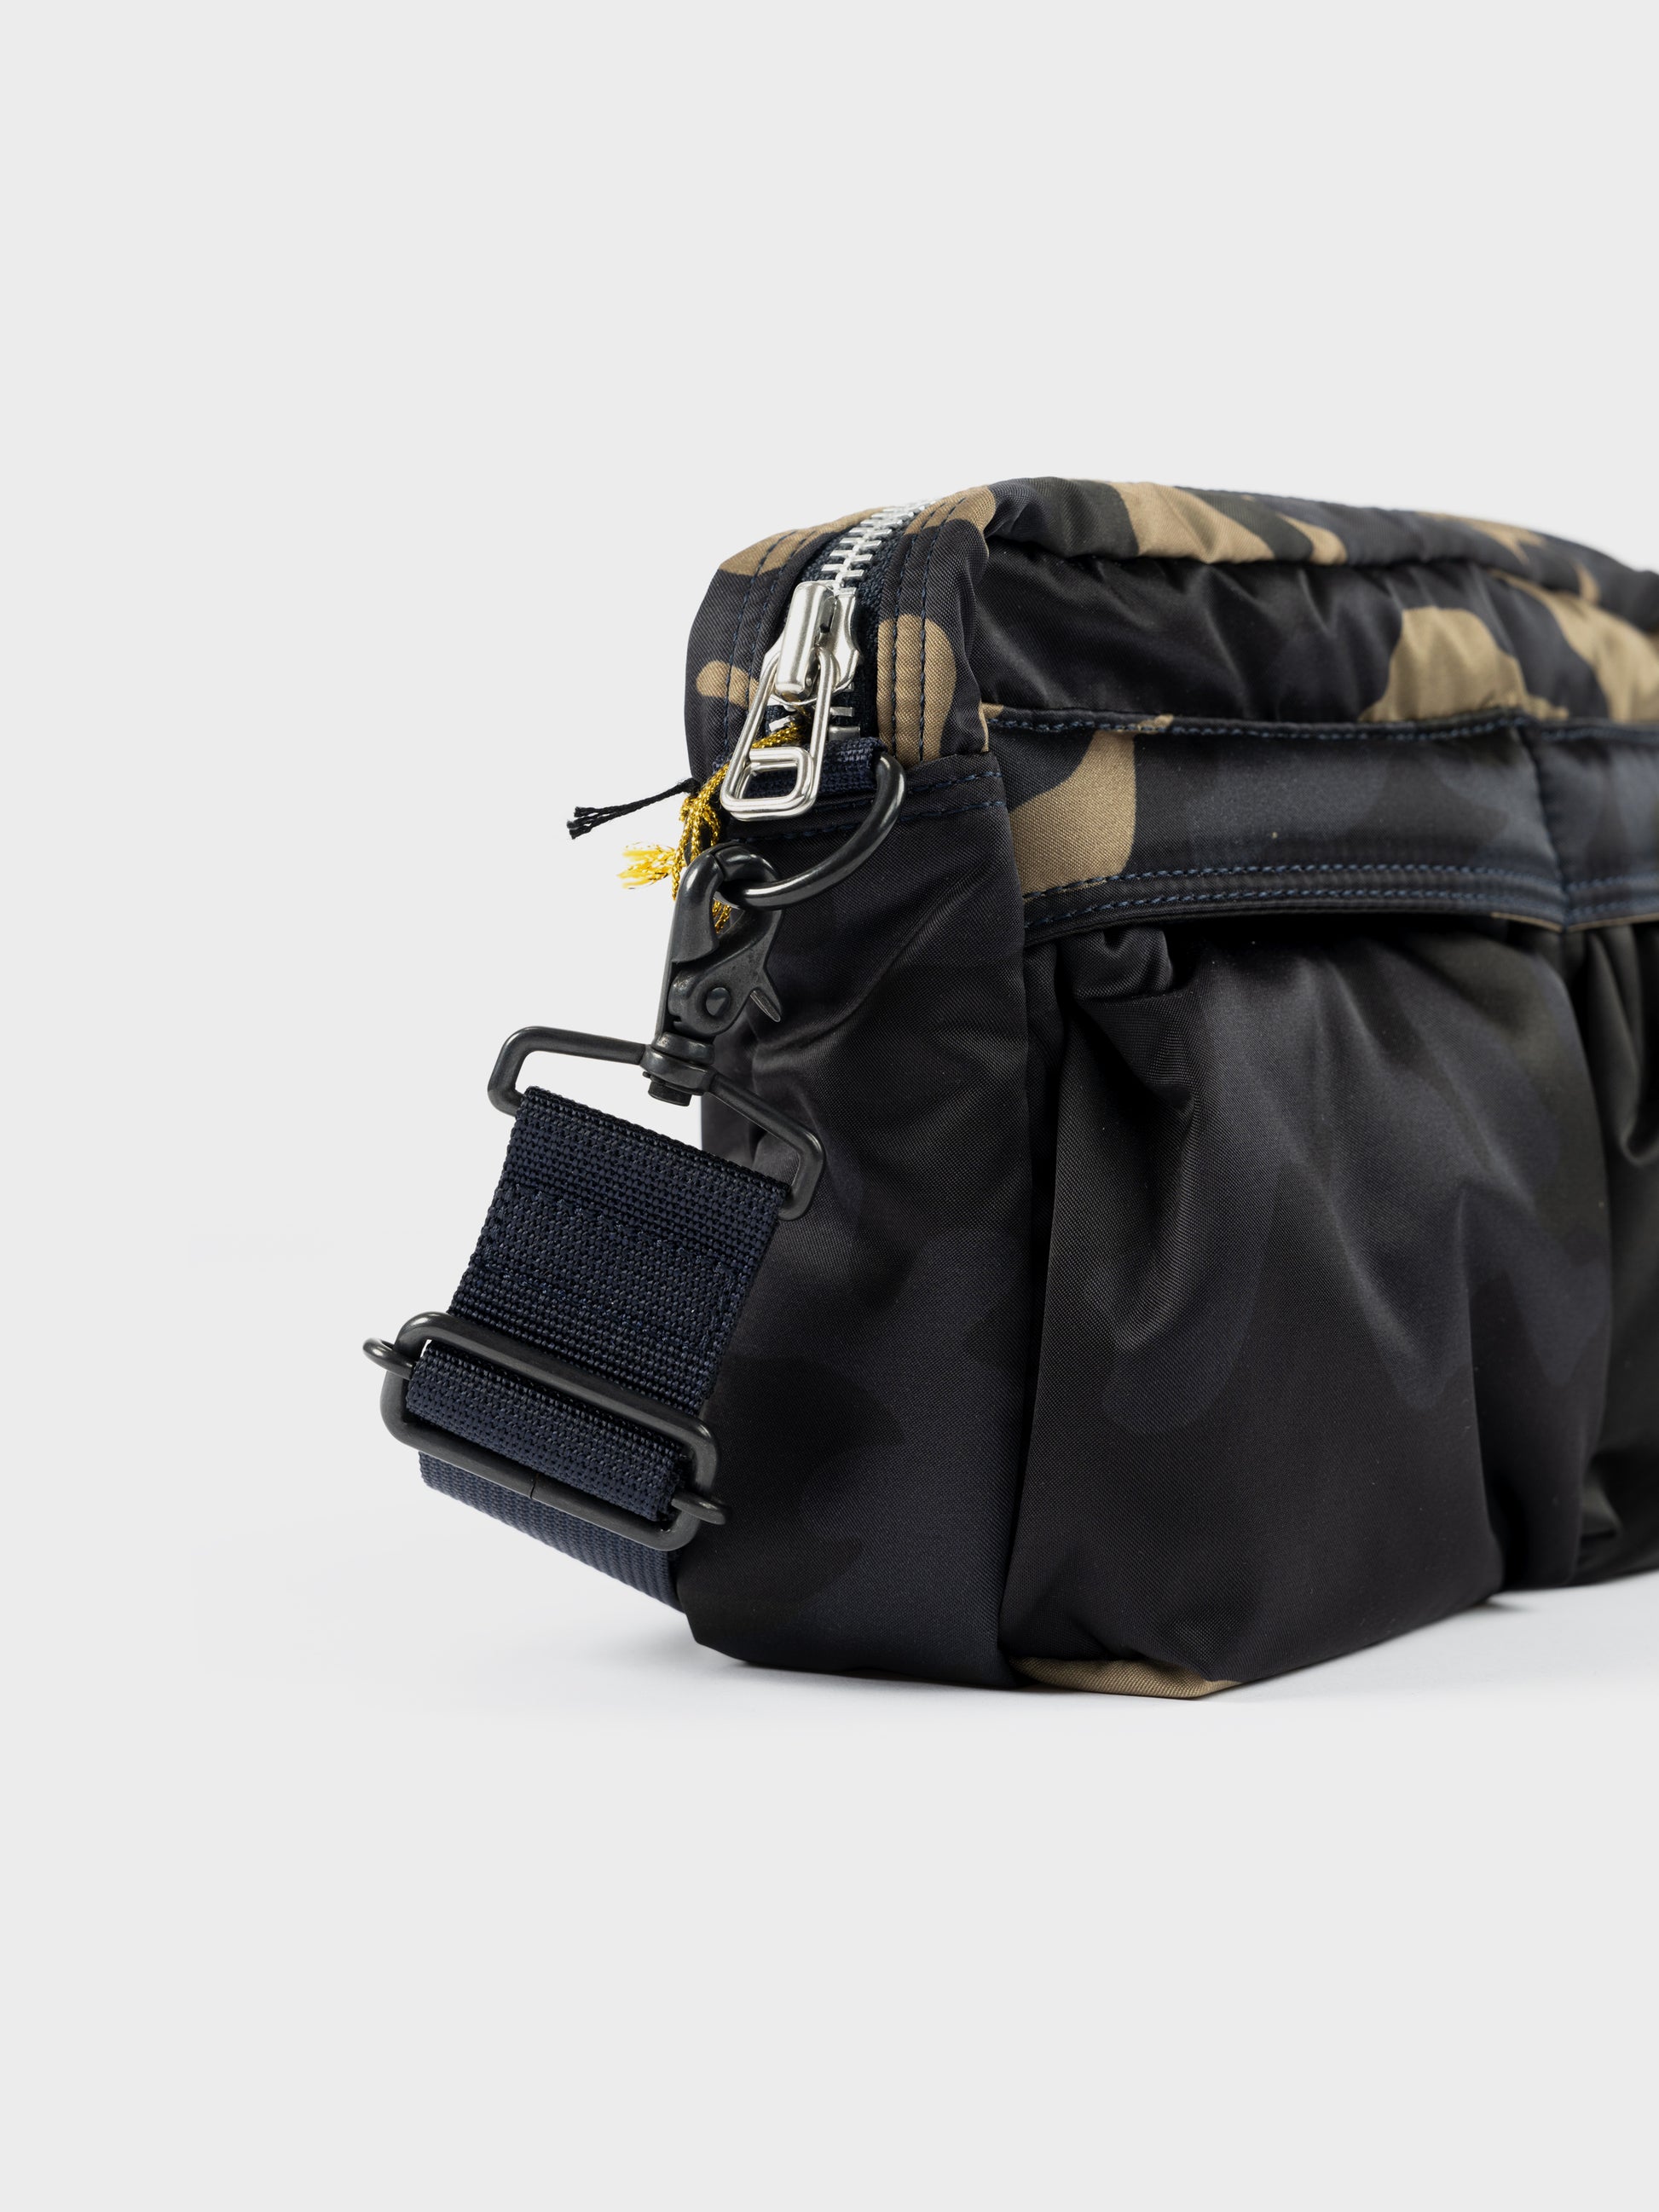 Porter-Yoshida & Co Counter Shade Shoulder Bag - Woodland Khaki